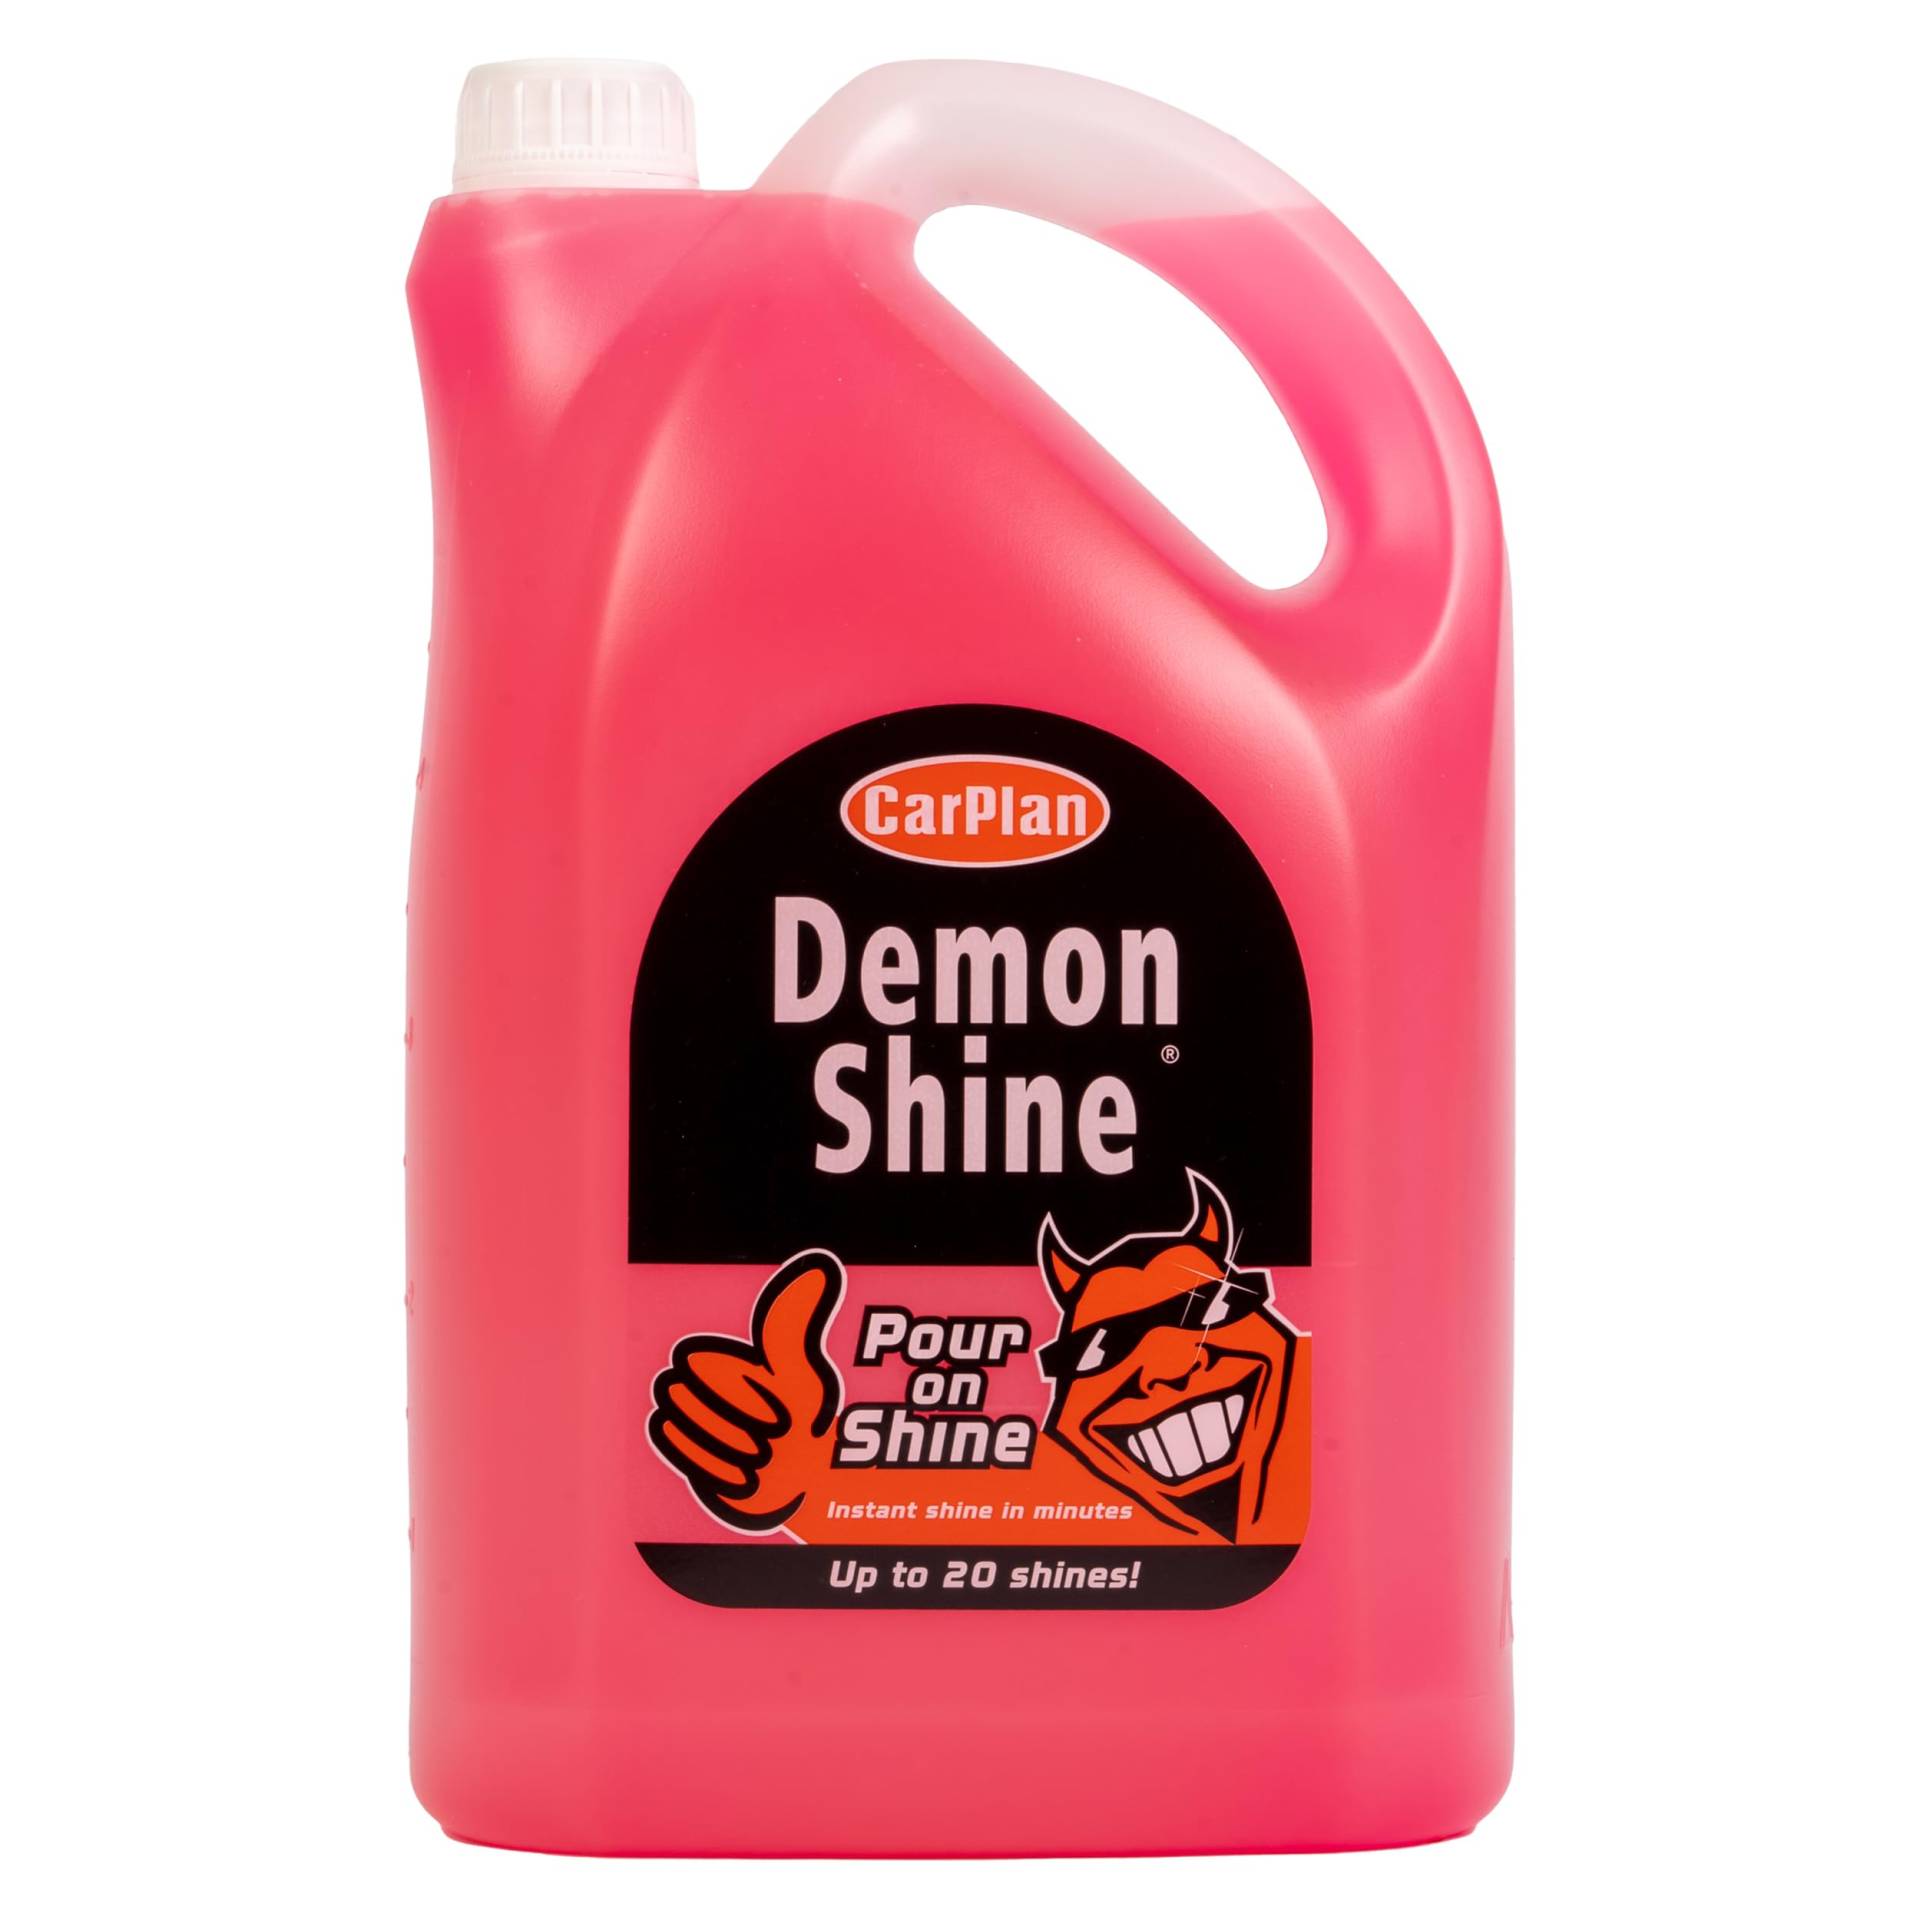 Demon Shine Pour on Shine Politur, 5 l von Carplan